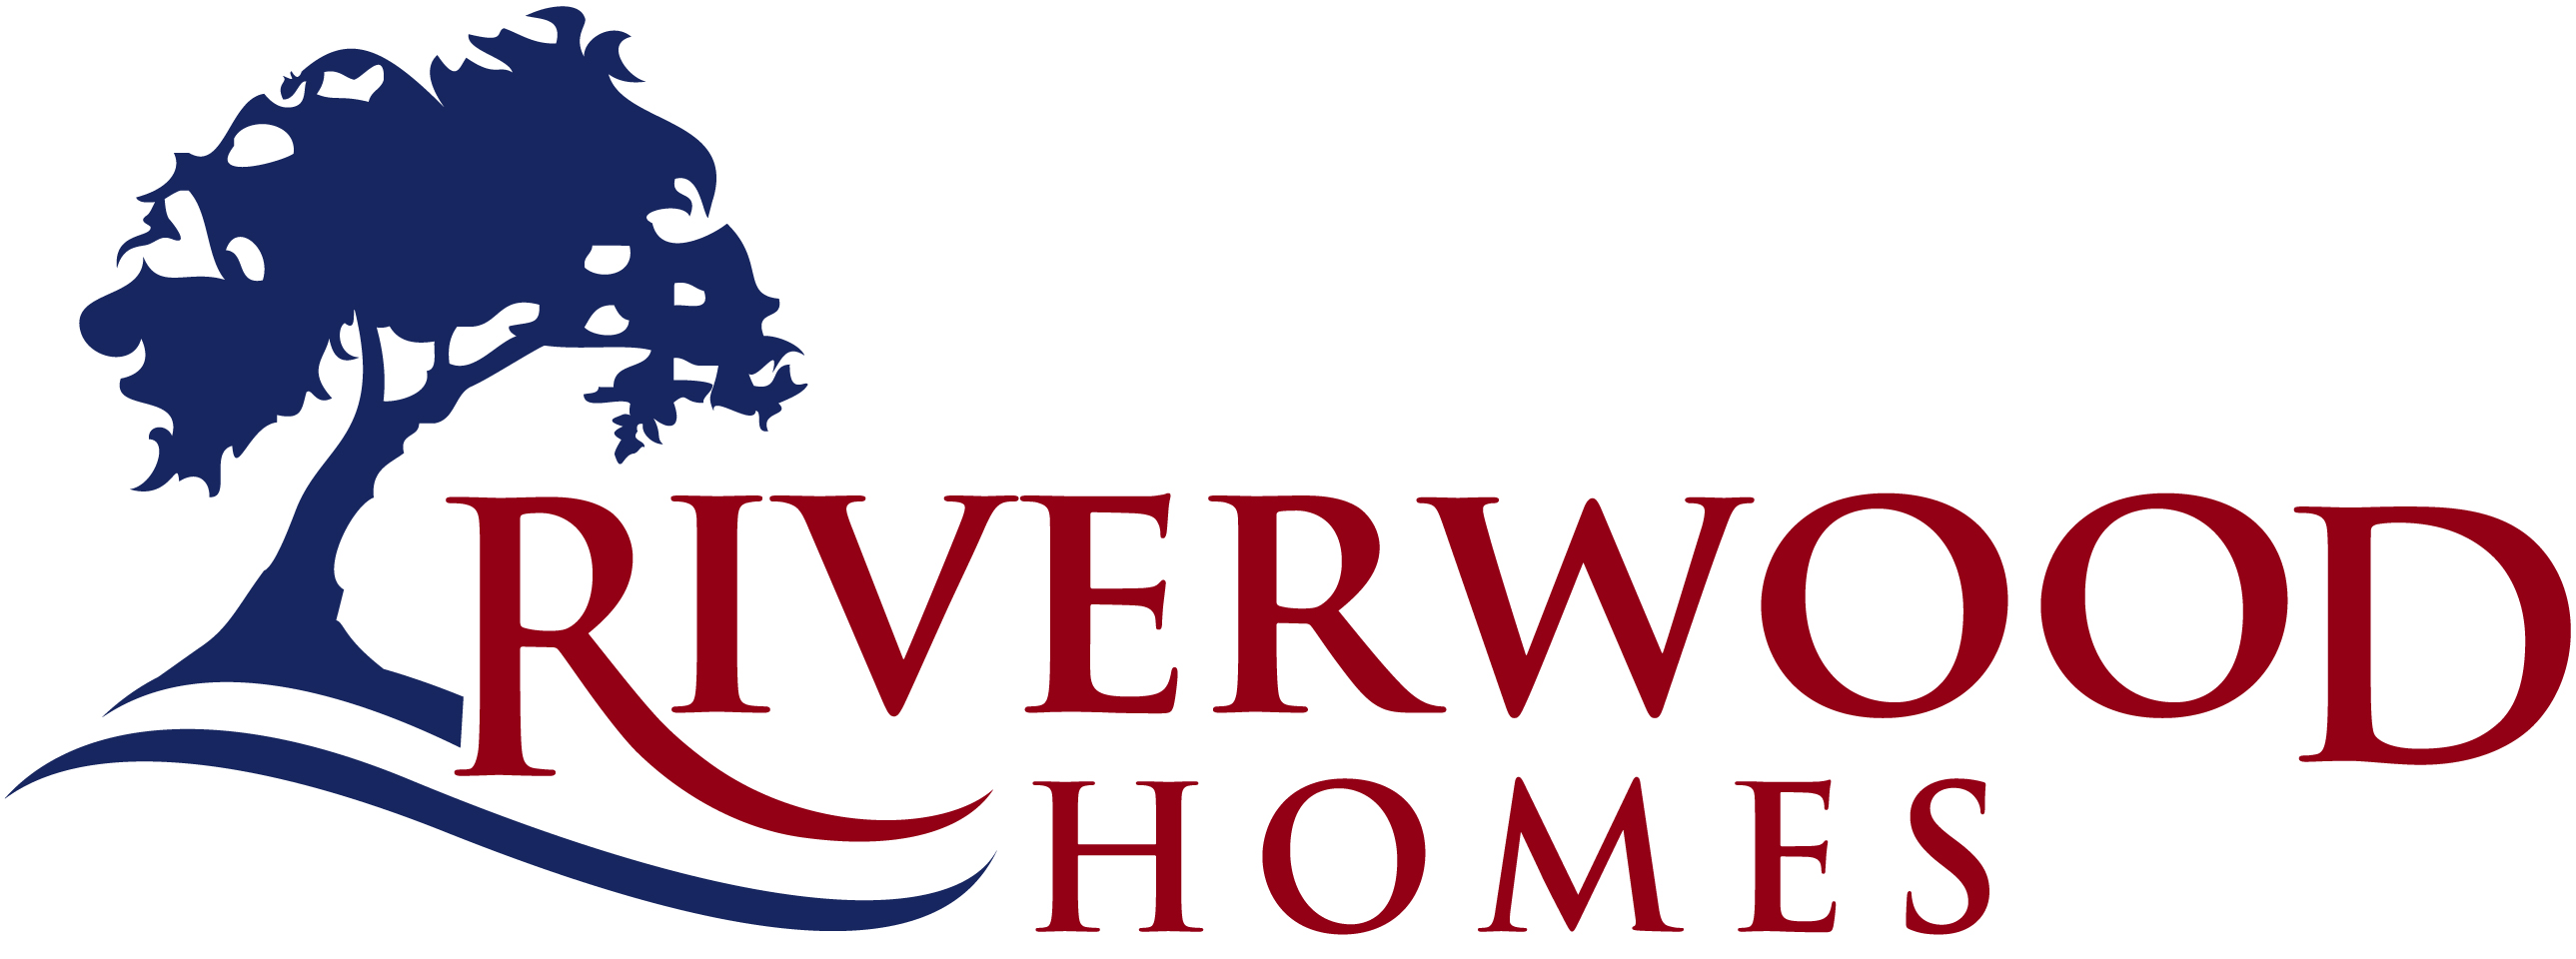 Riverwood Homes, Inc. company logo